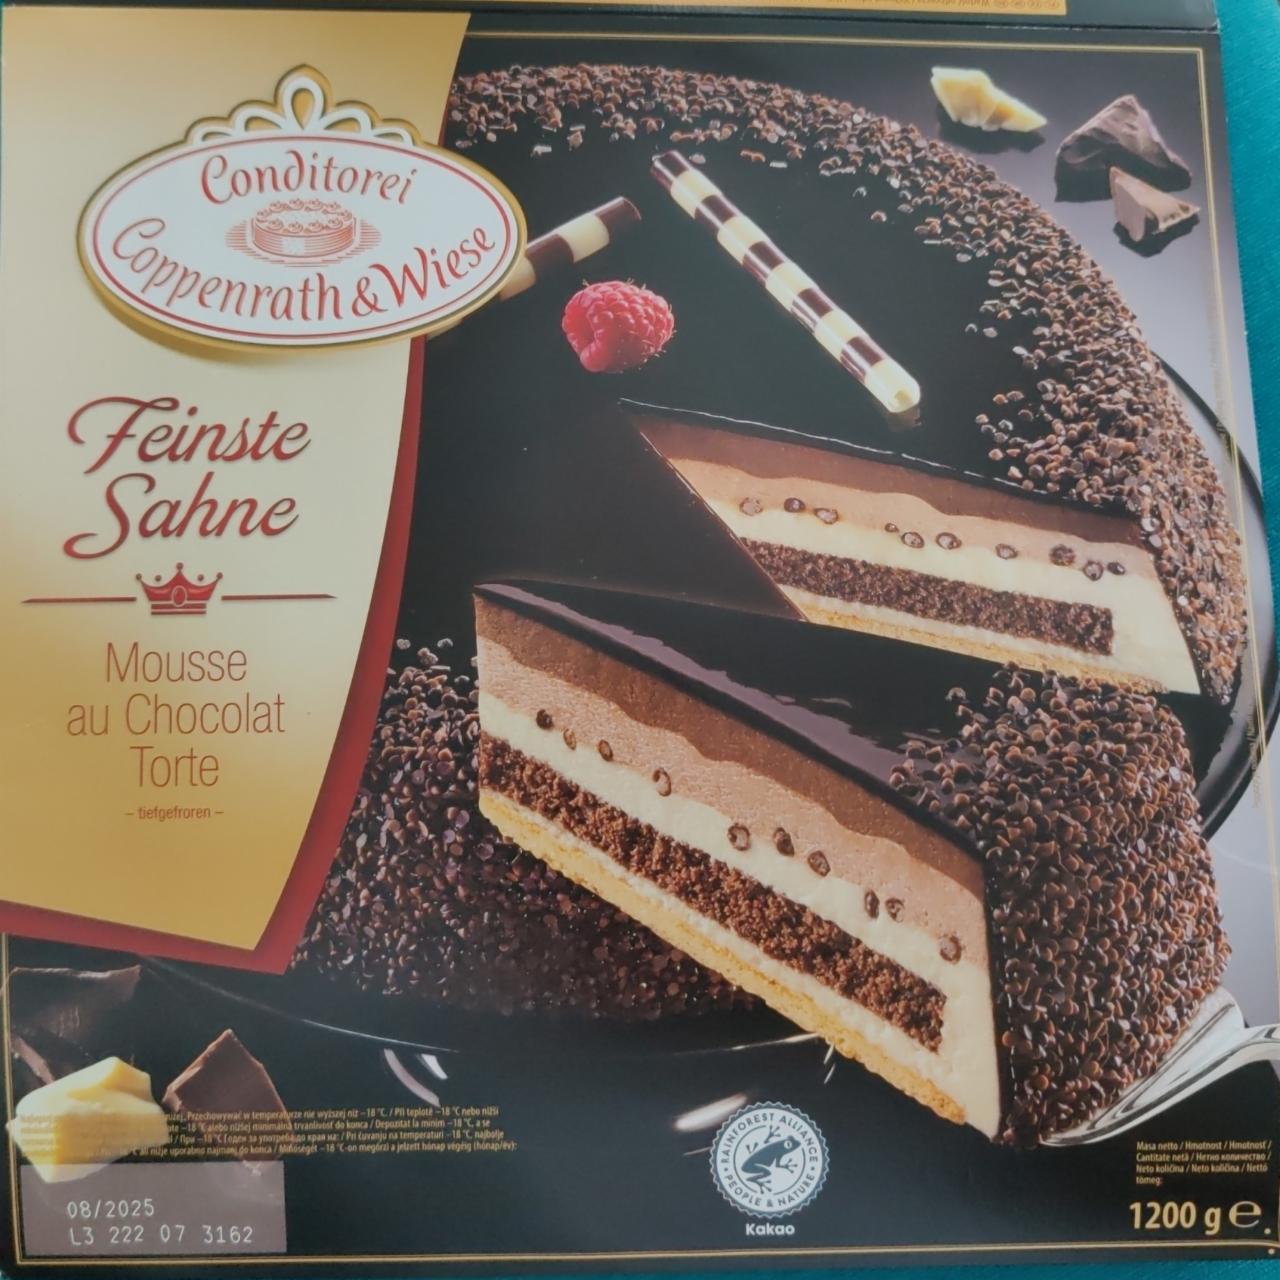 Fotografie - Feinste Sahne Mousse au Chocolat Torte Conditorei Coppenrath & Wiese